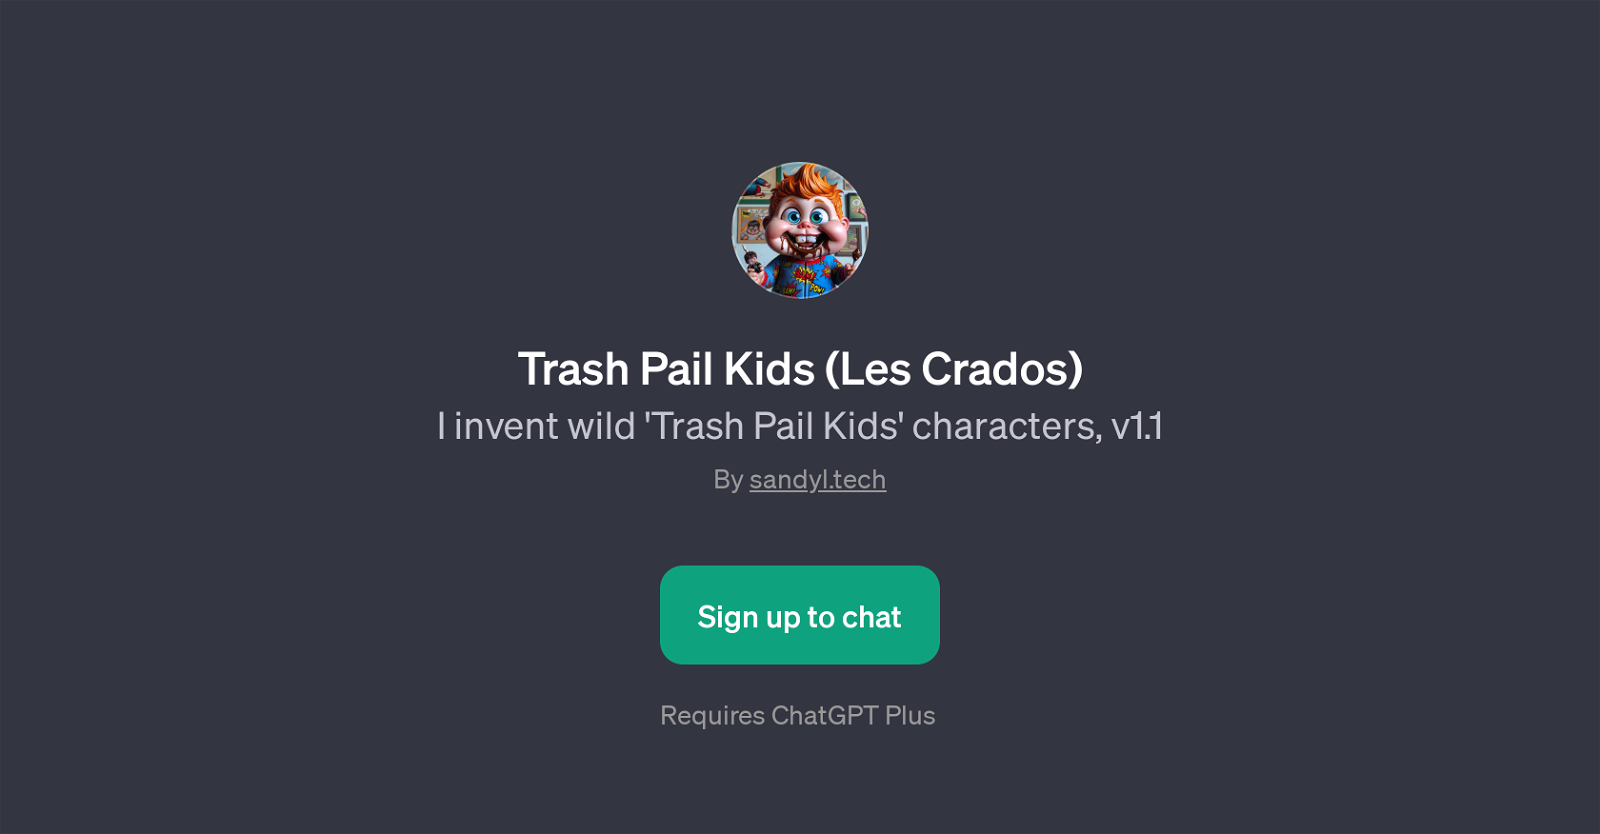 Trash Pail Kids (Les Crados) website